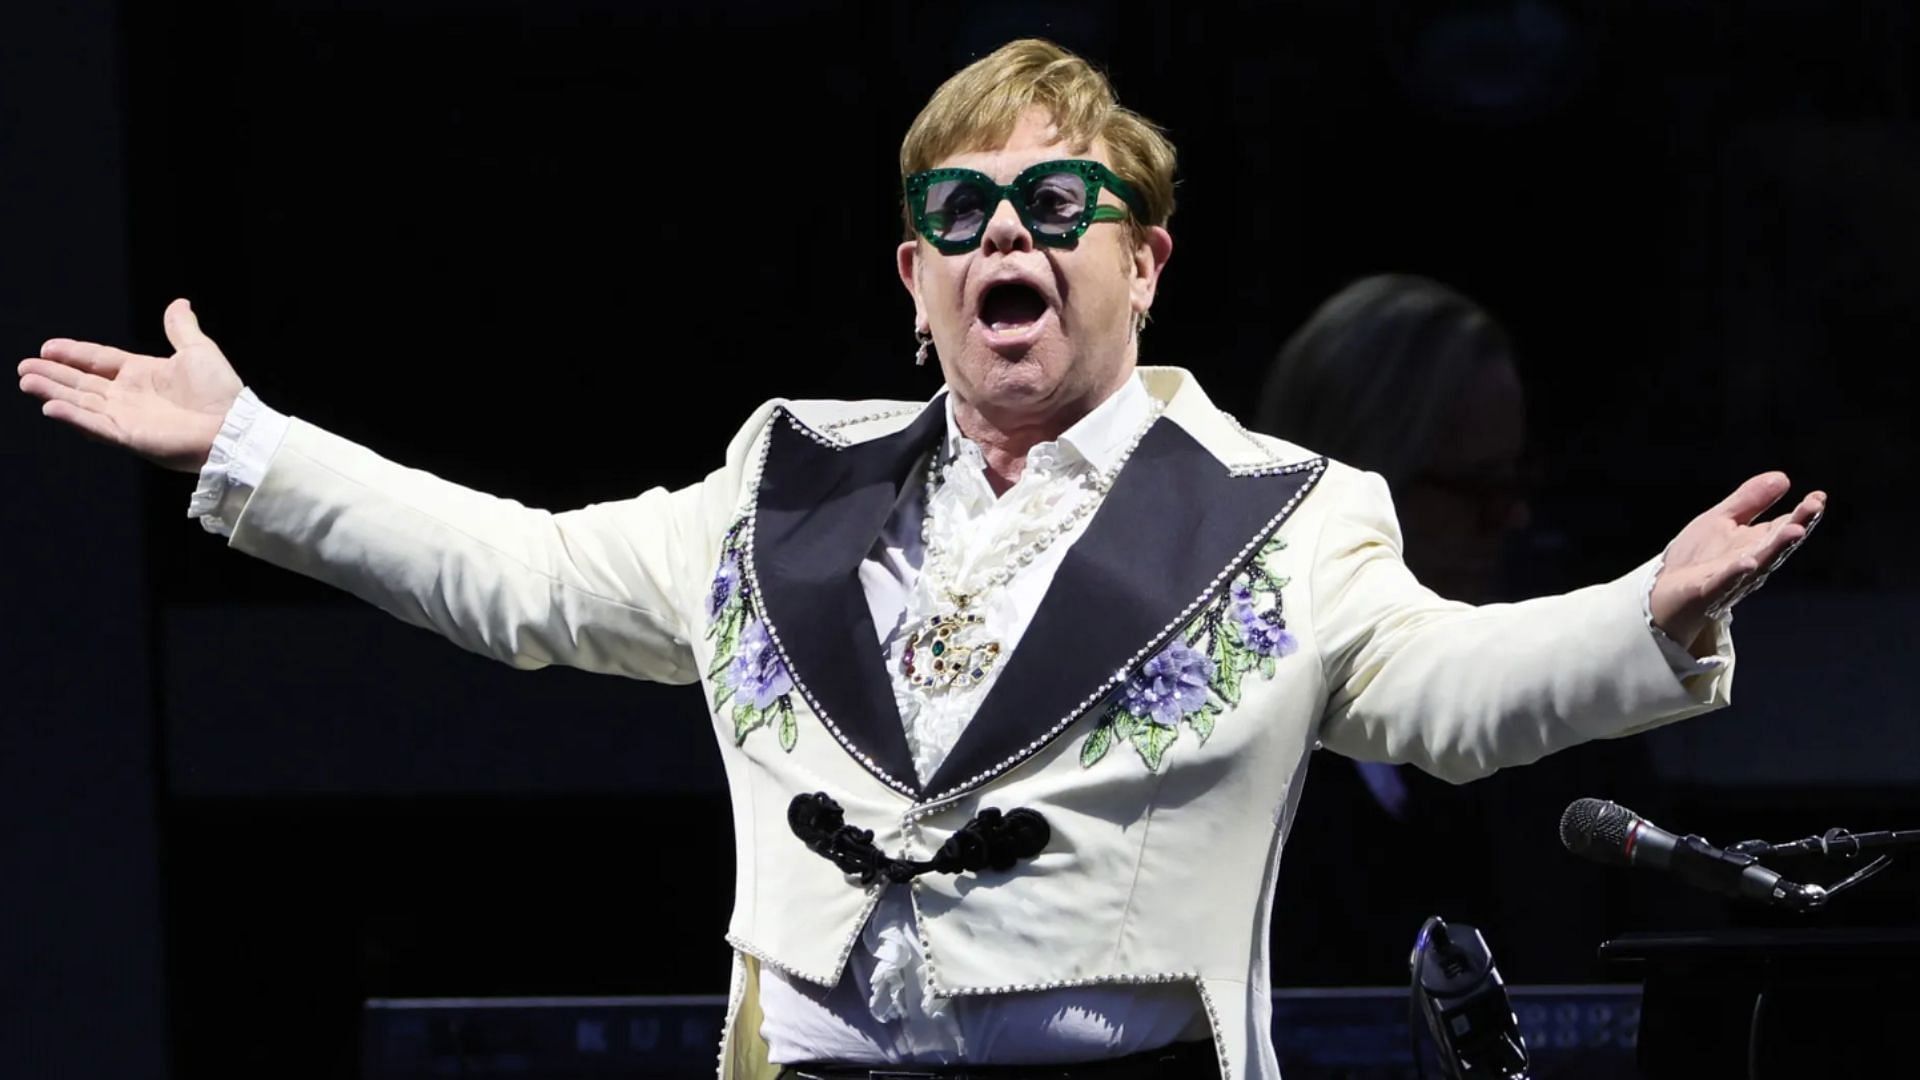 Elton John will be headlining next year